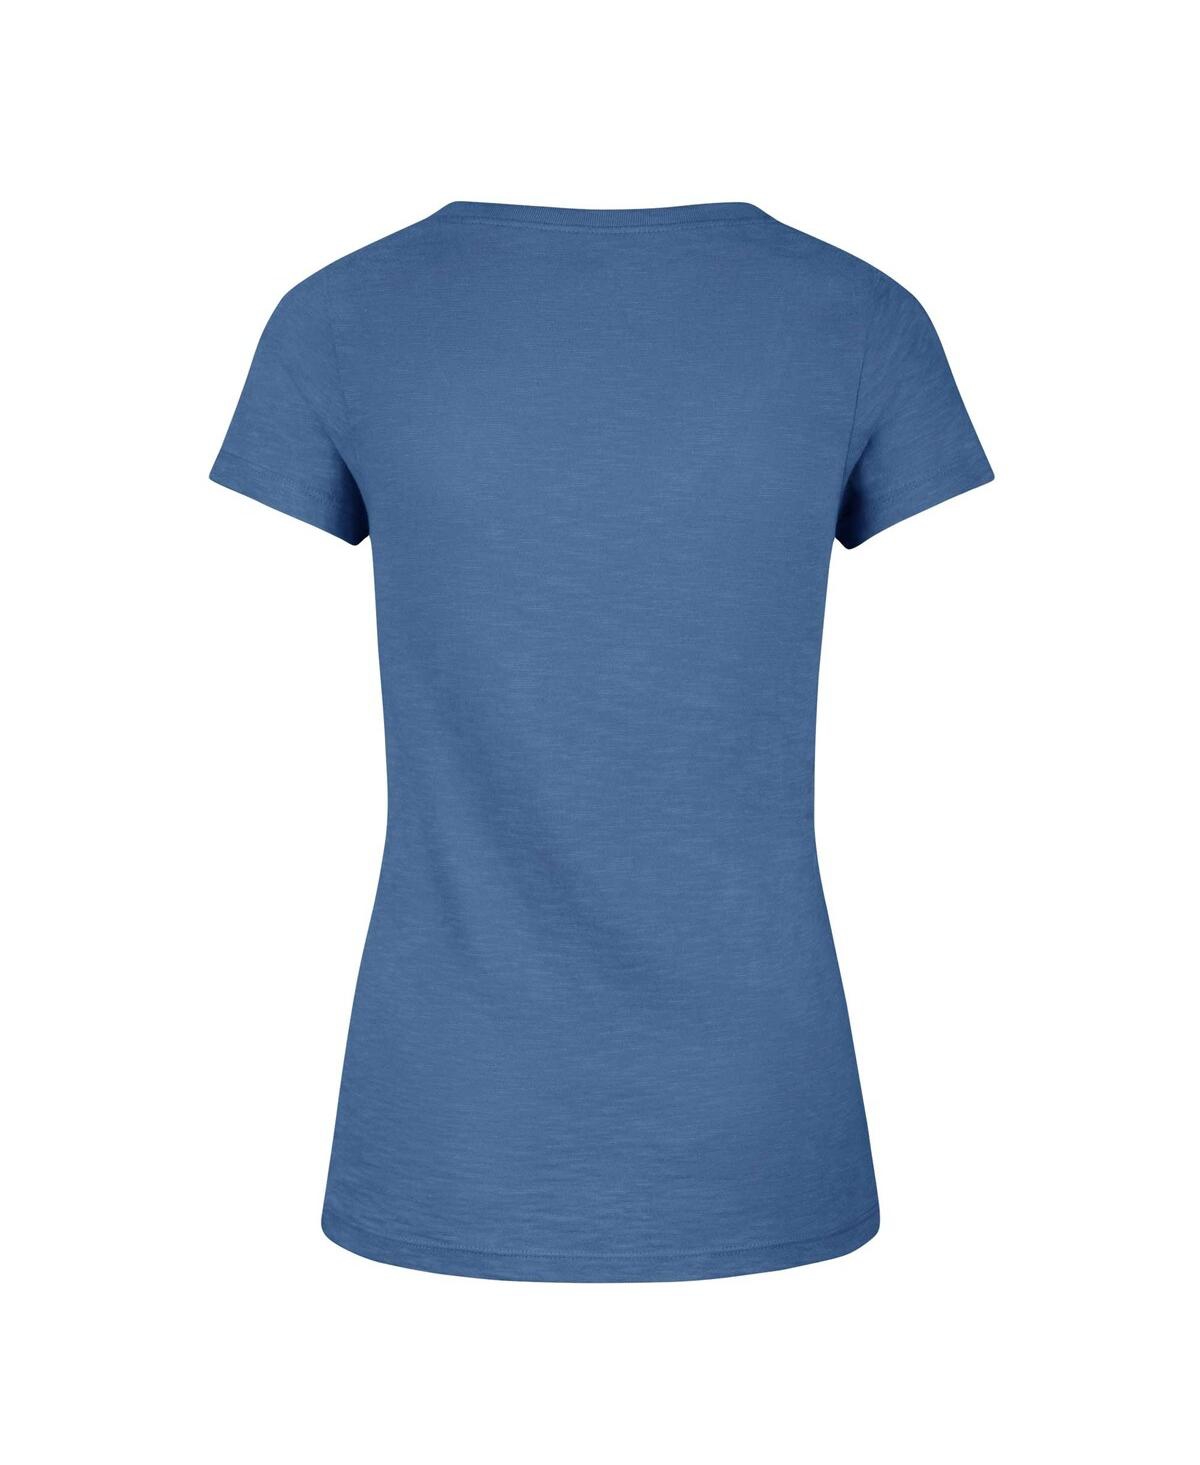 Shop 47 Brand Women's ' Blue Distressed Detroit Lions Avery Scrum V-neck T-shirt